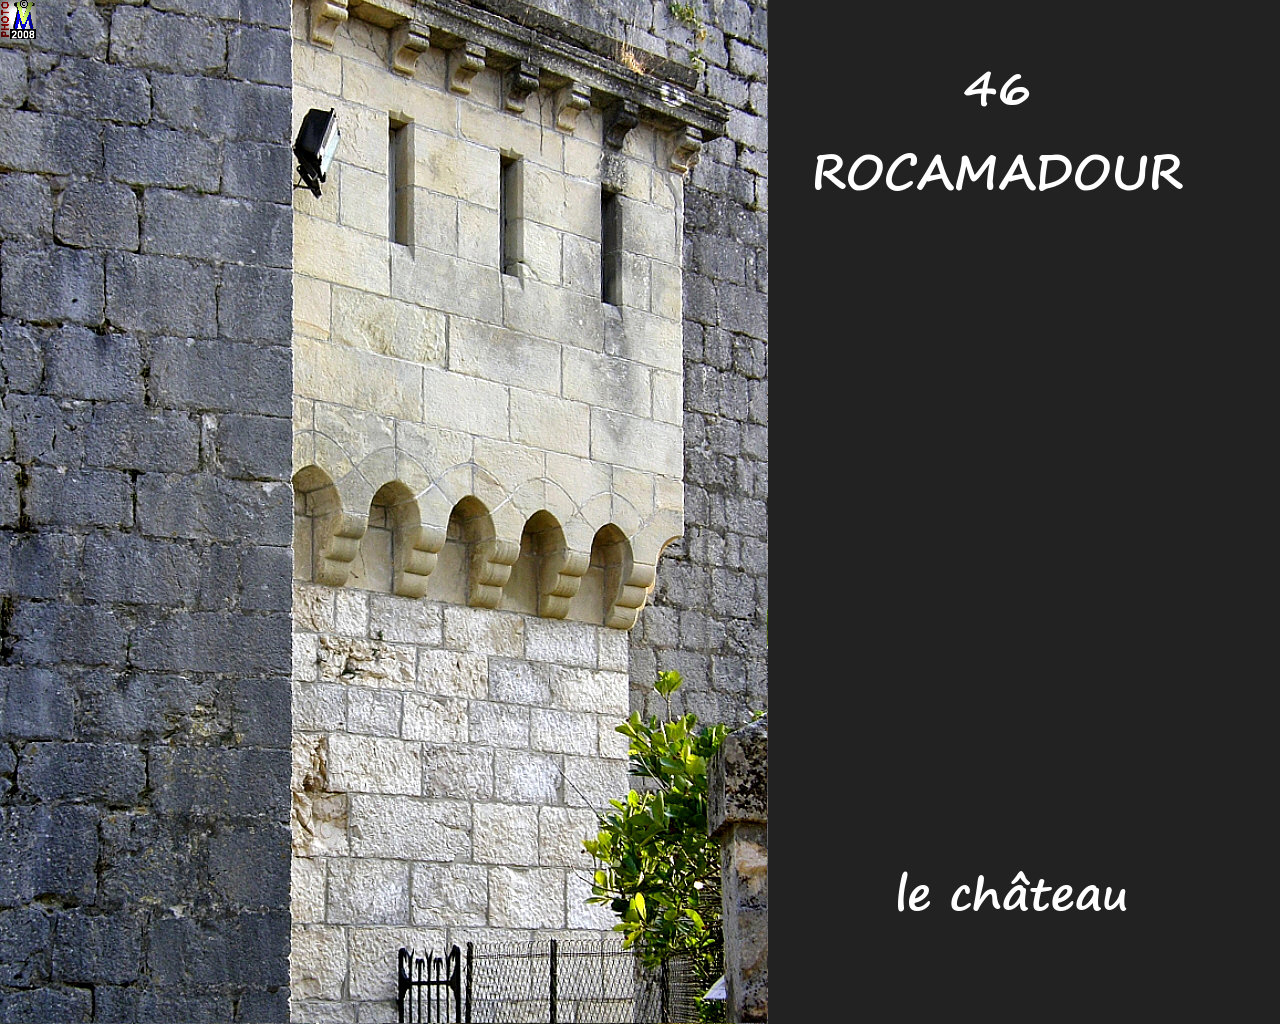 46ROCAMADOUR_chateau_122.jpg